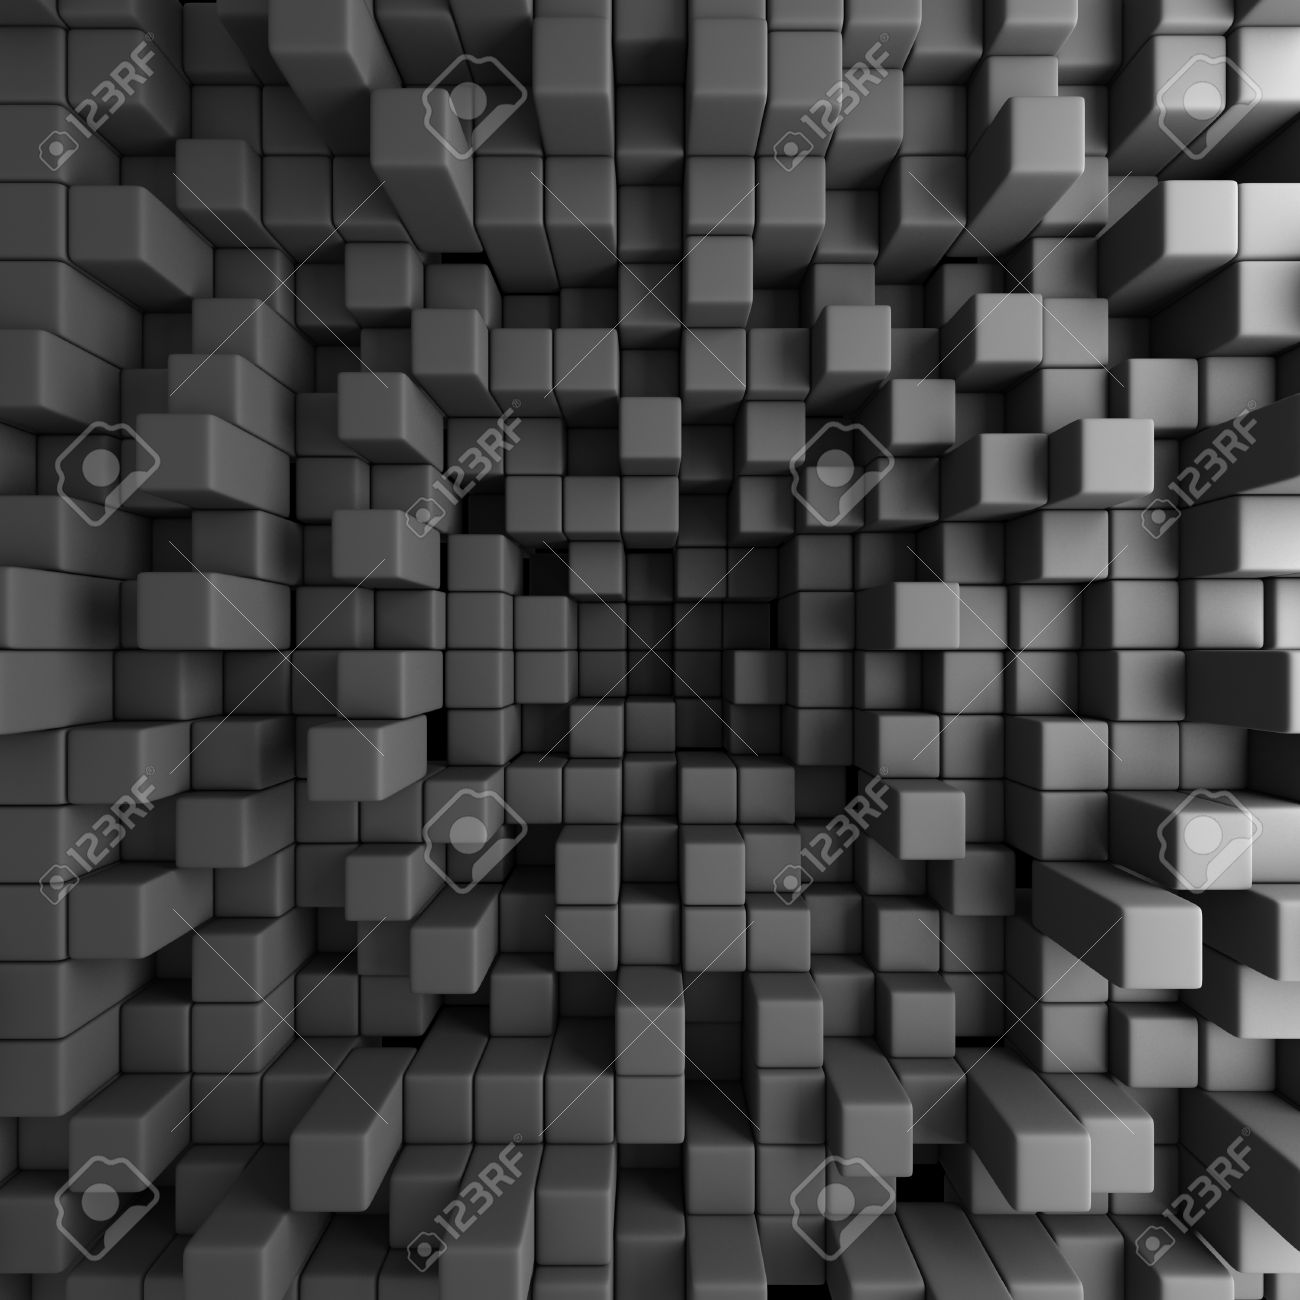 Abstract 3d Cubes Blocks Wallpaper Background Render